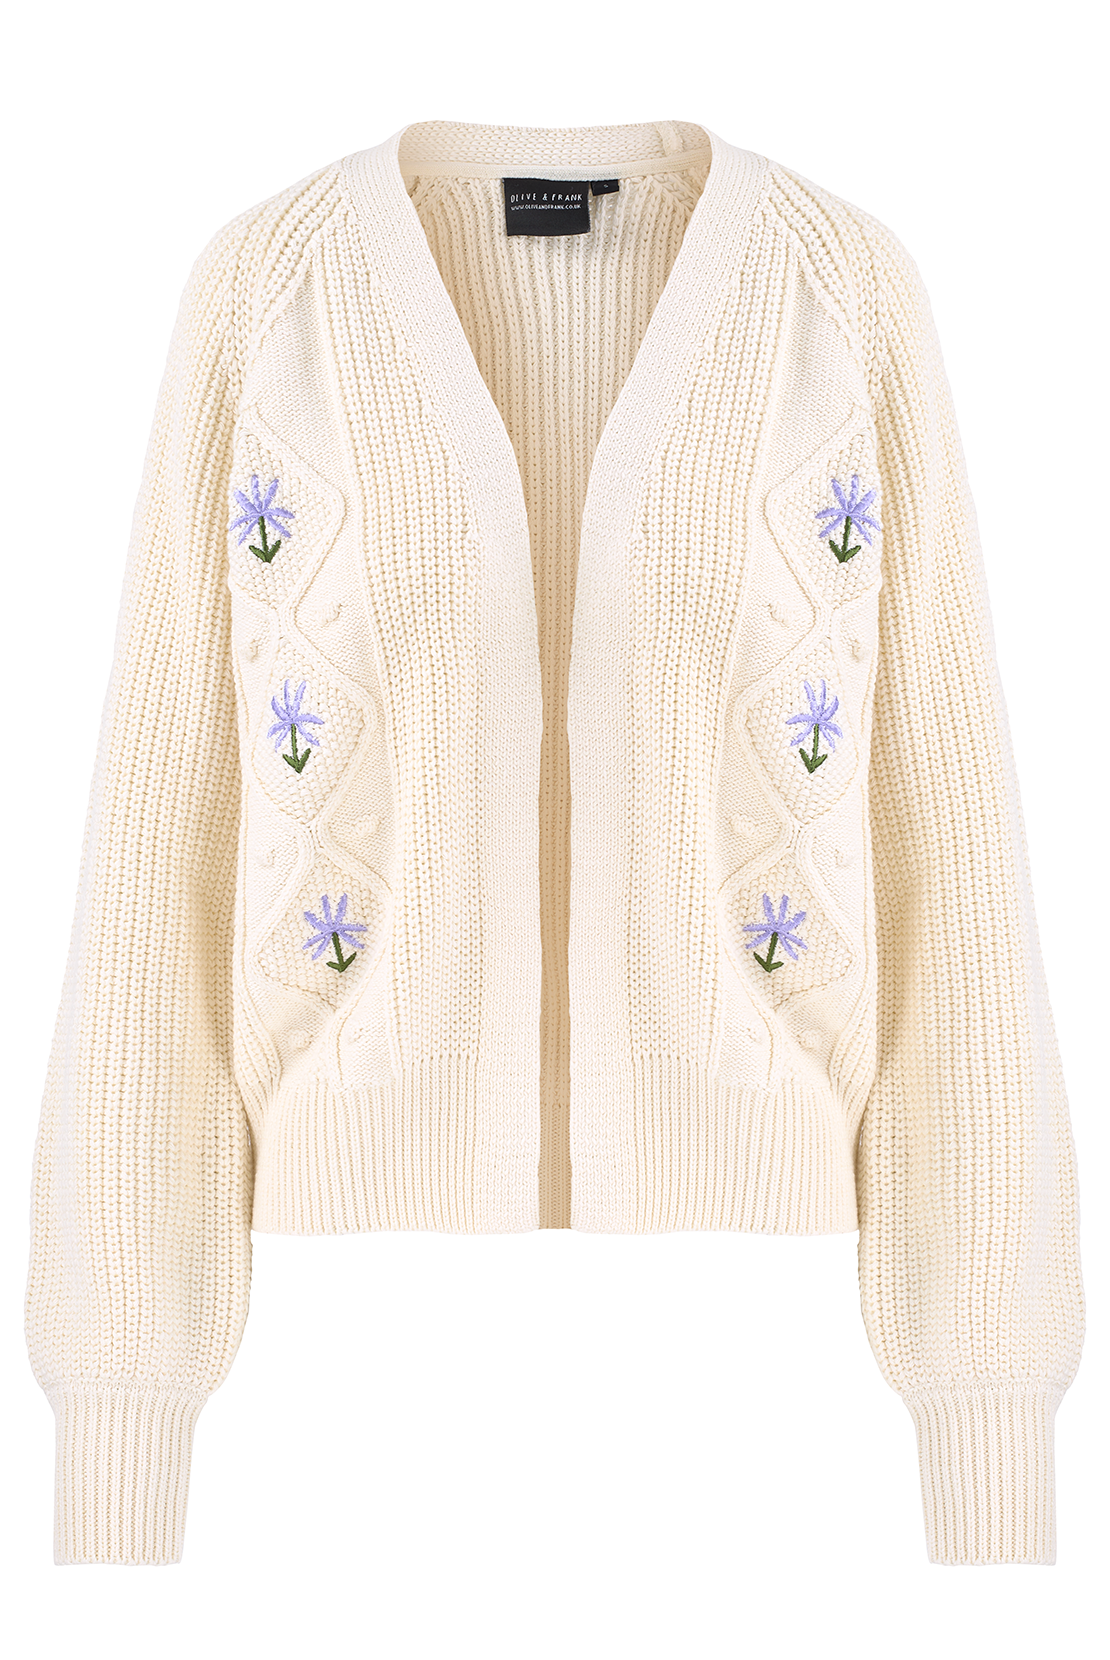 O&F Aran Flower Embroidered Cardigan - Cream